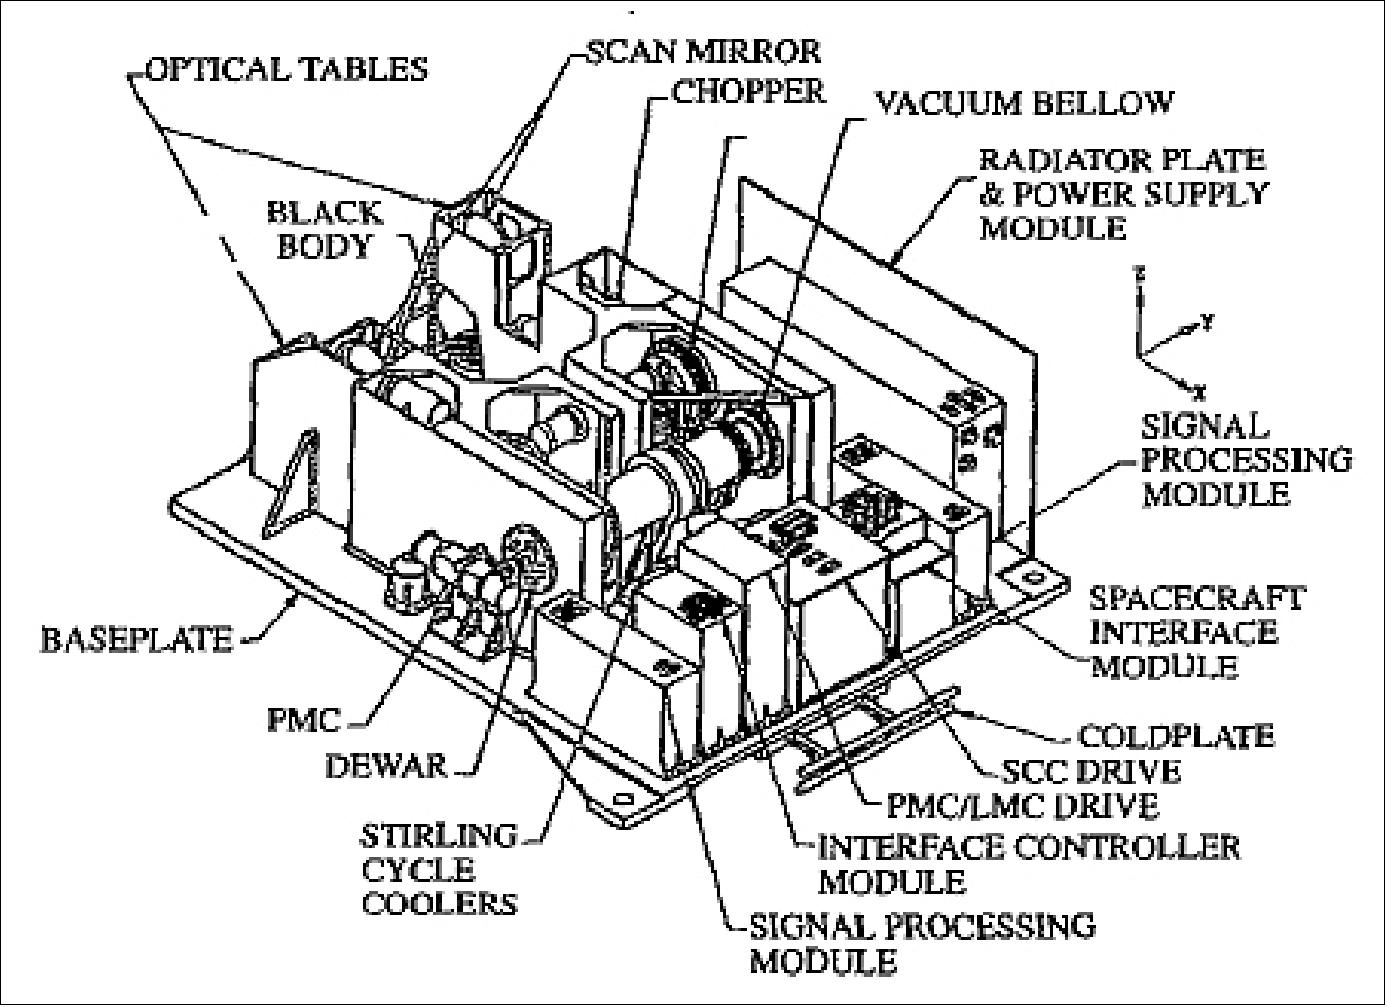 Figure 56: Isometric optical system layout of the MOPITT instrument (image credit: University of Toronto)